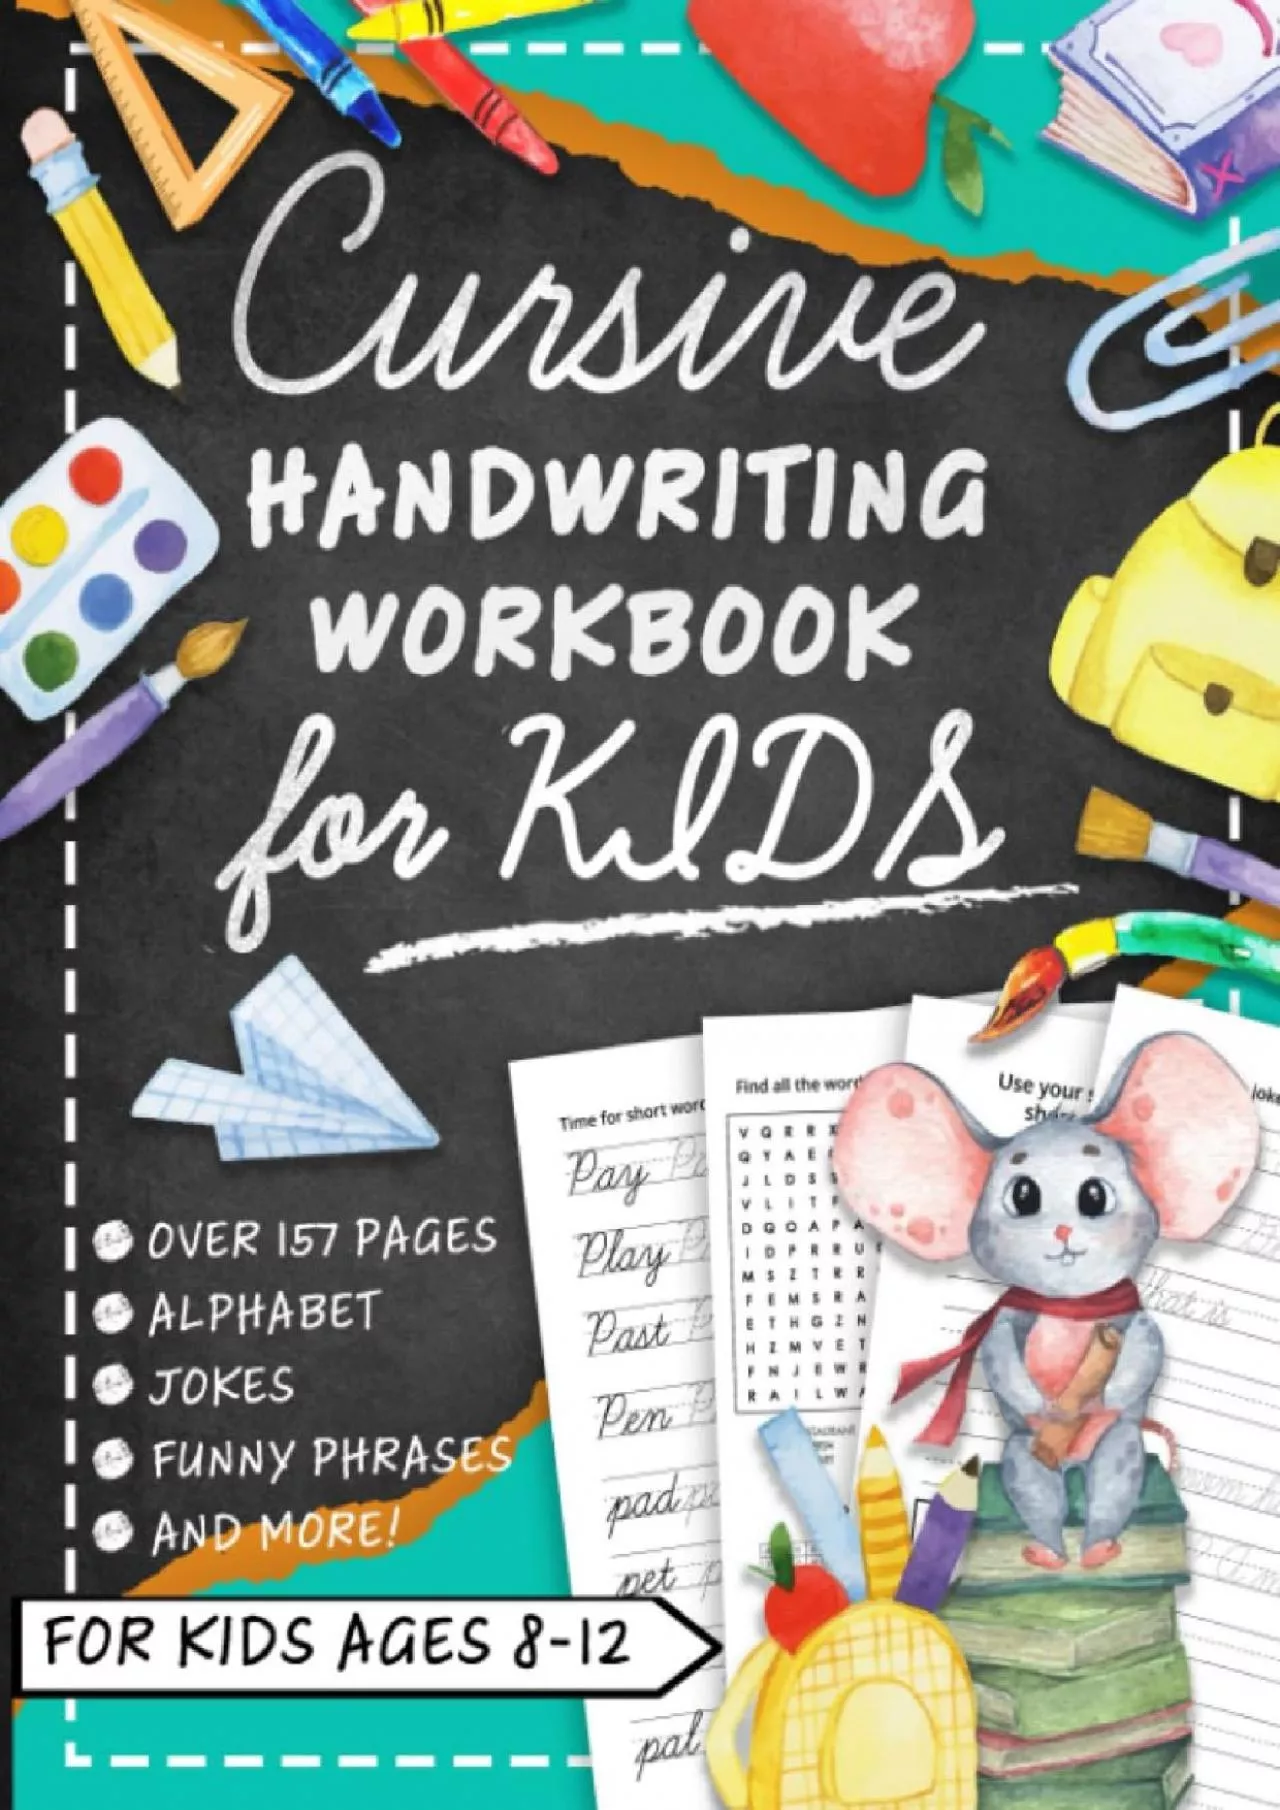 [EBOOK] Cursive Handwriting Workbook for Kids Ages 8-12 with Jokes  Riddles: Penmanship